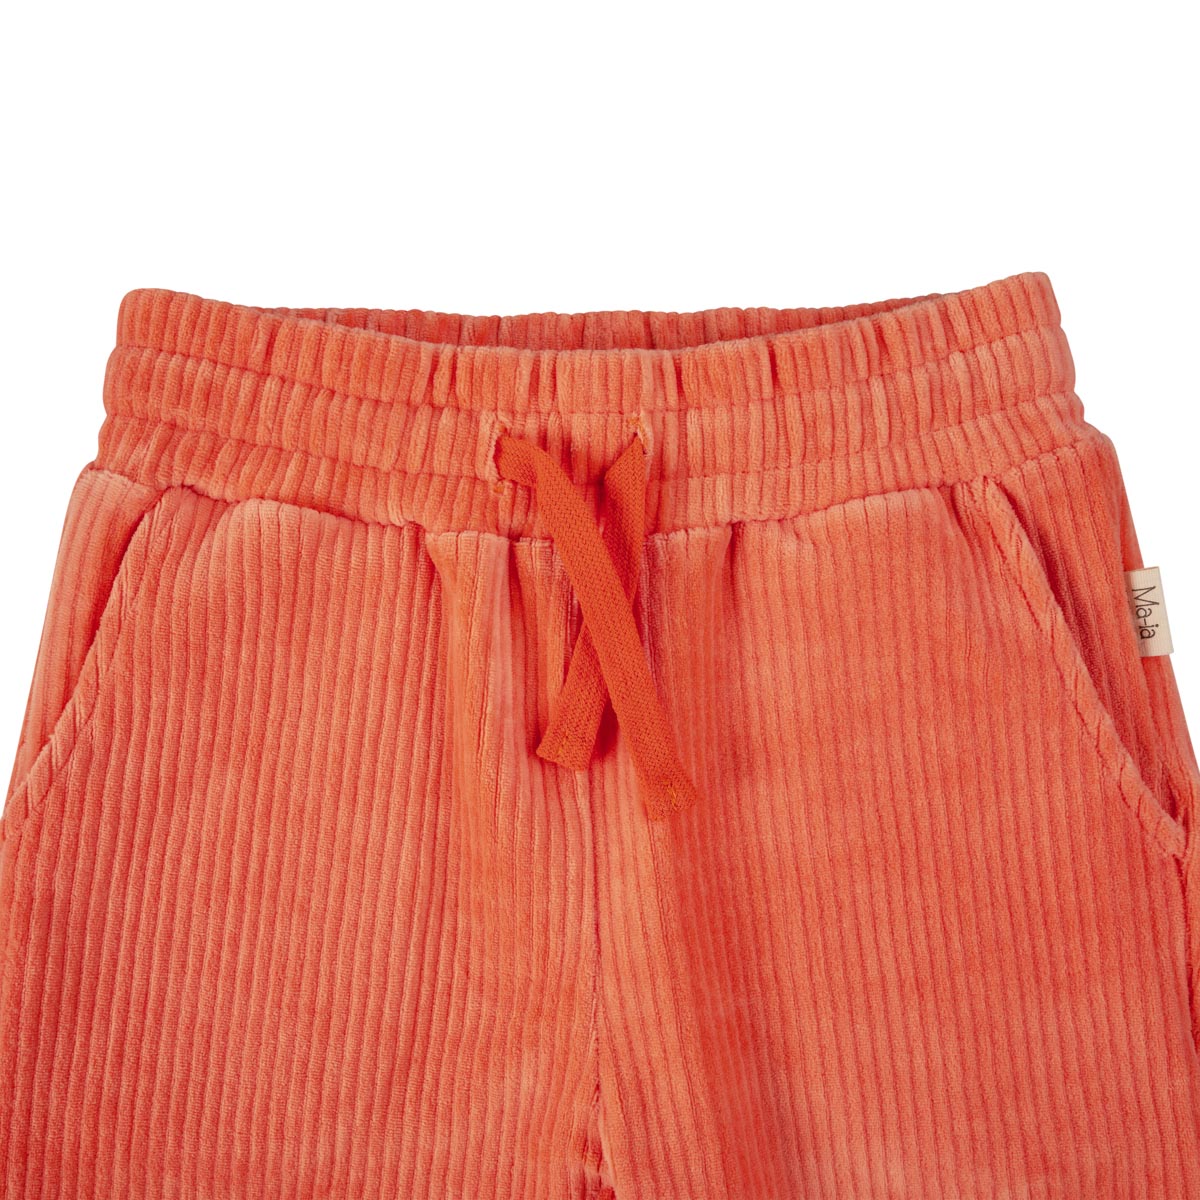 Merri Trousers, orange